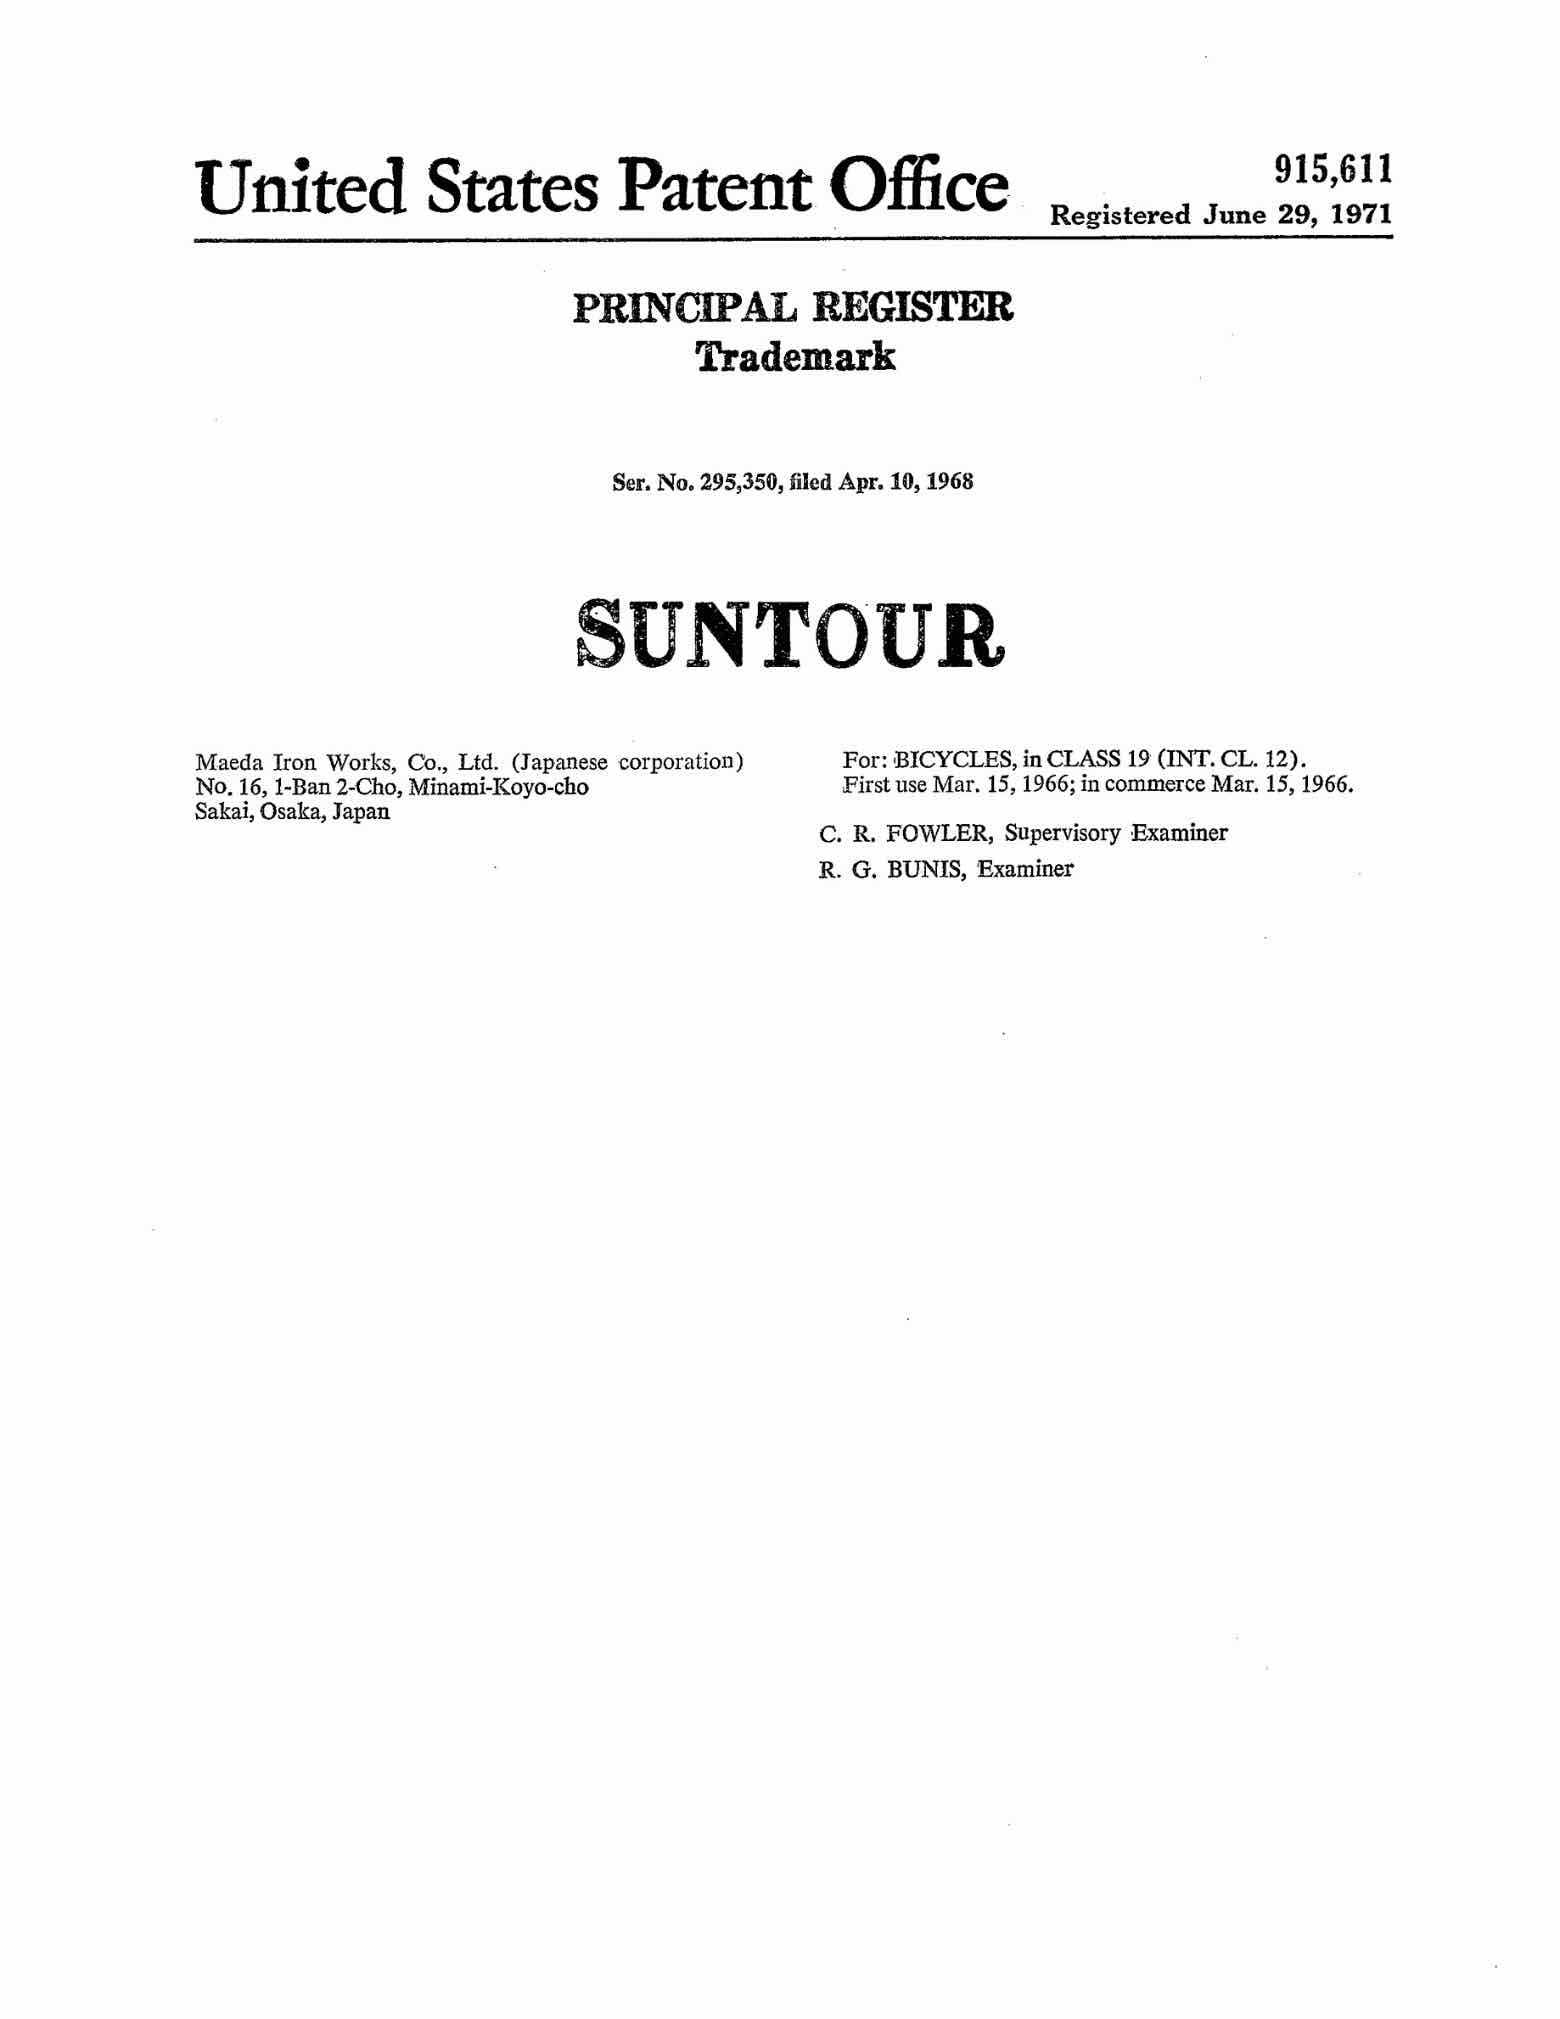 US Trademark 915,611 - SunTour main image